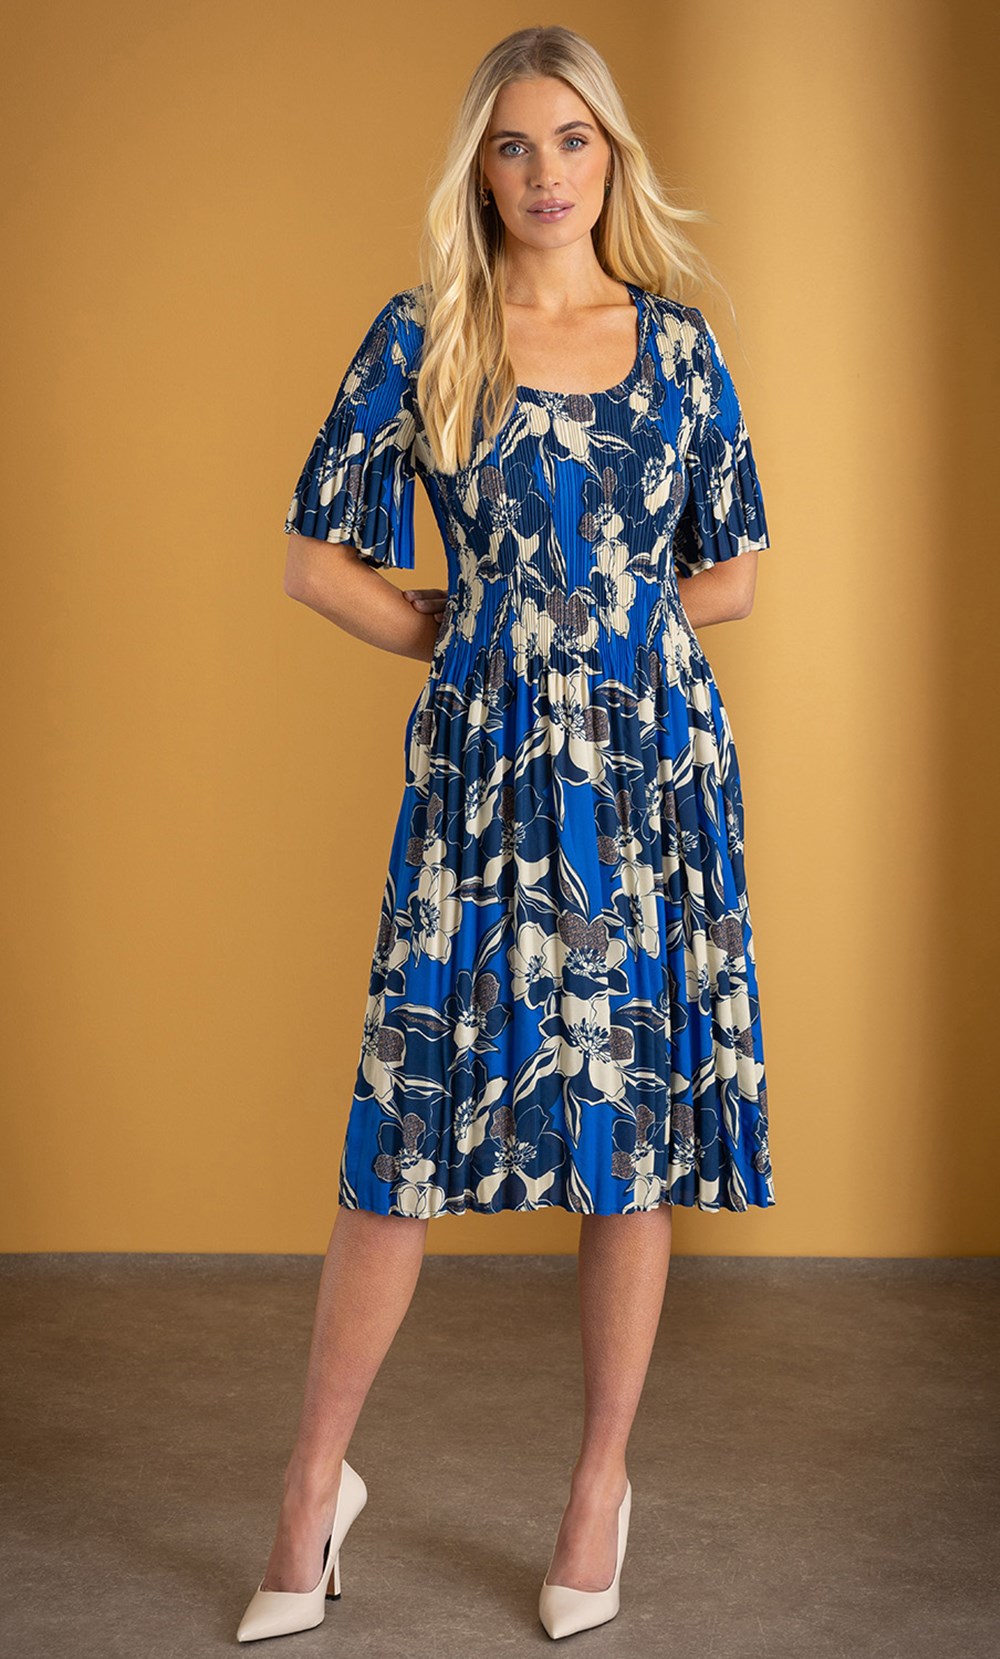 Brands - Klass Floral Print Pleated Dress Blue/Black Women’s